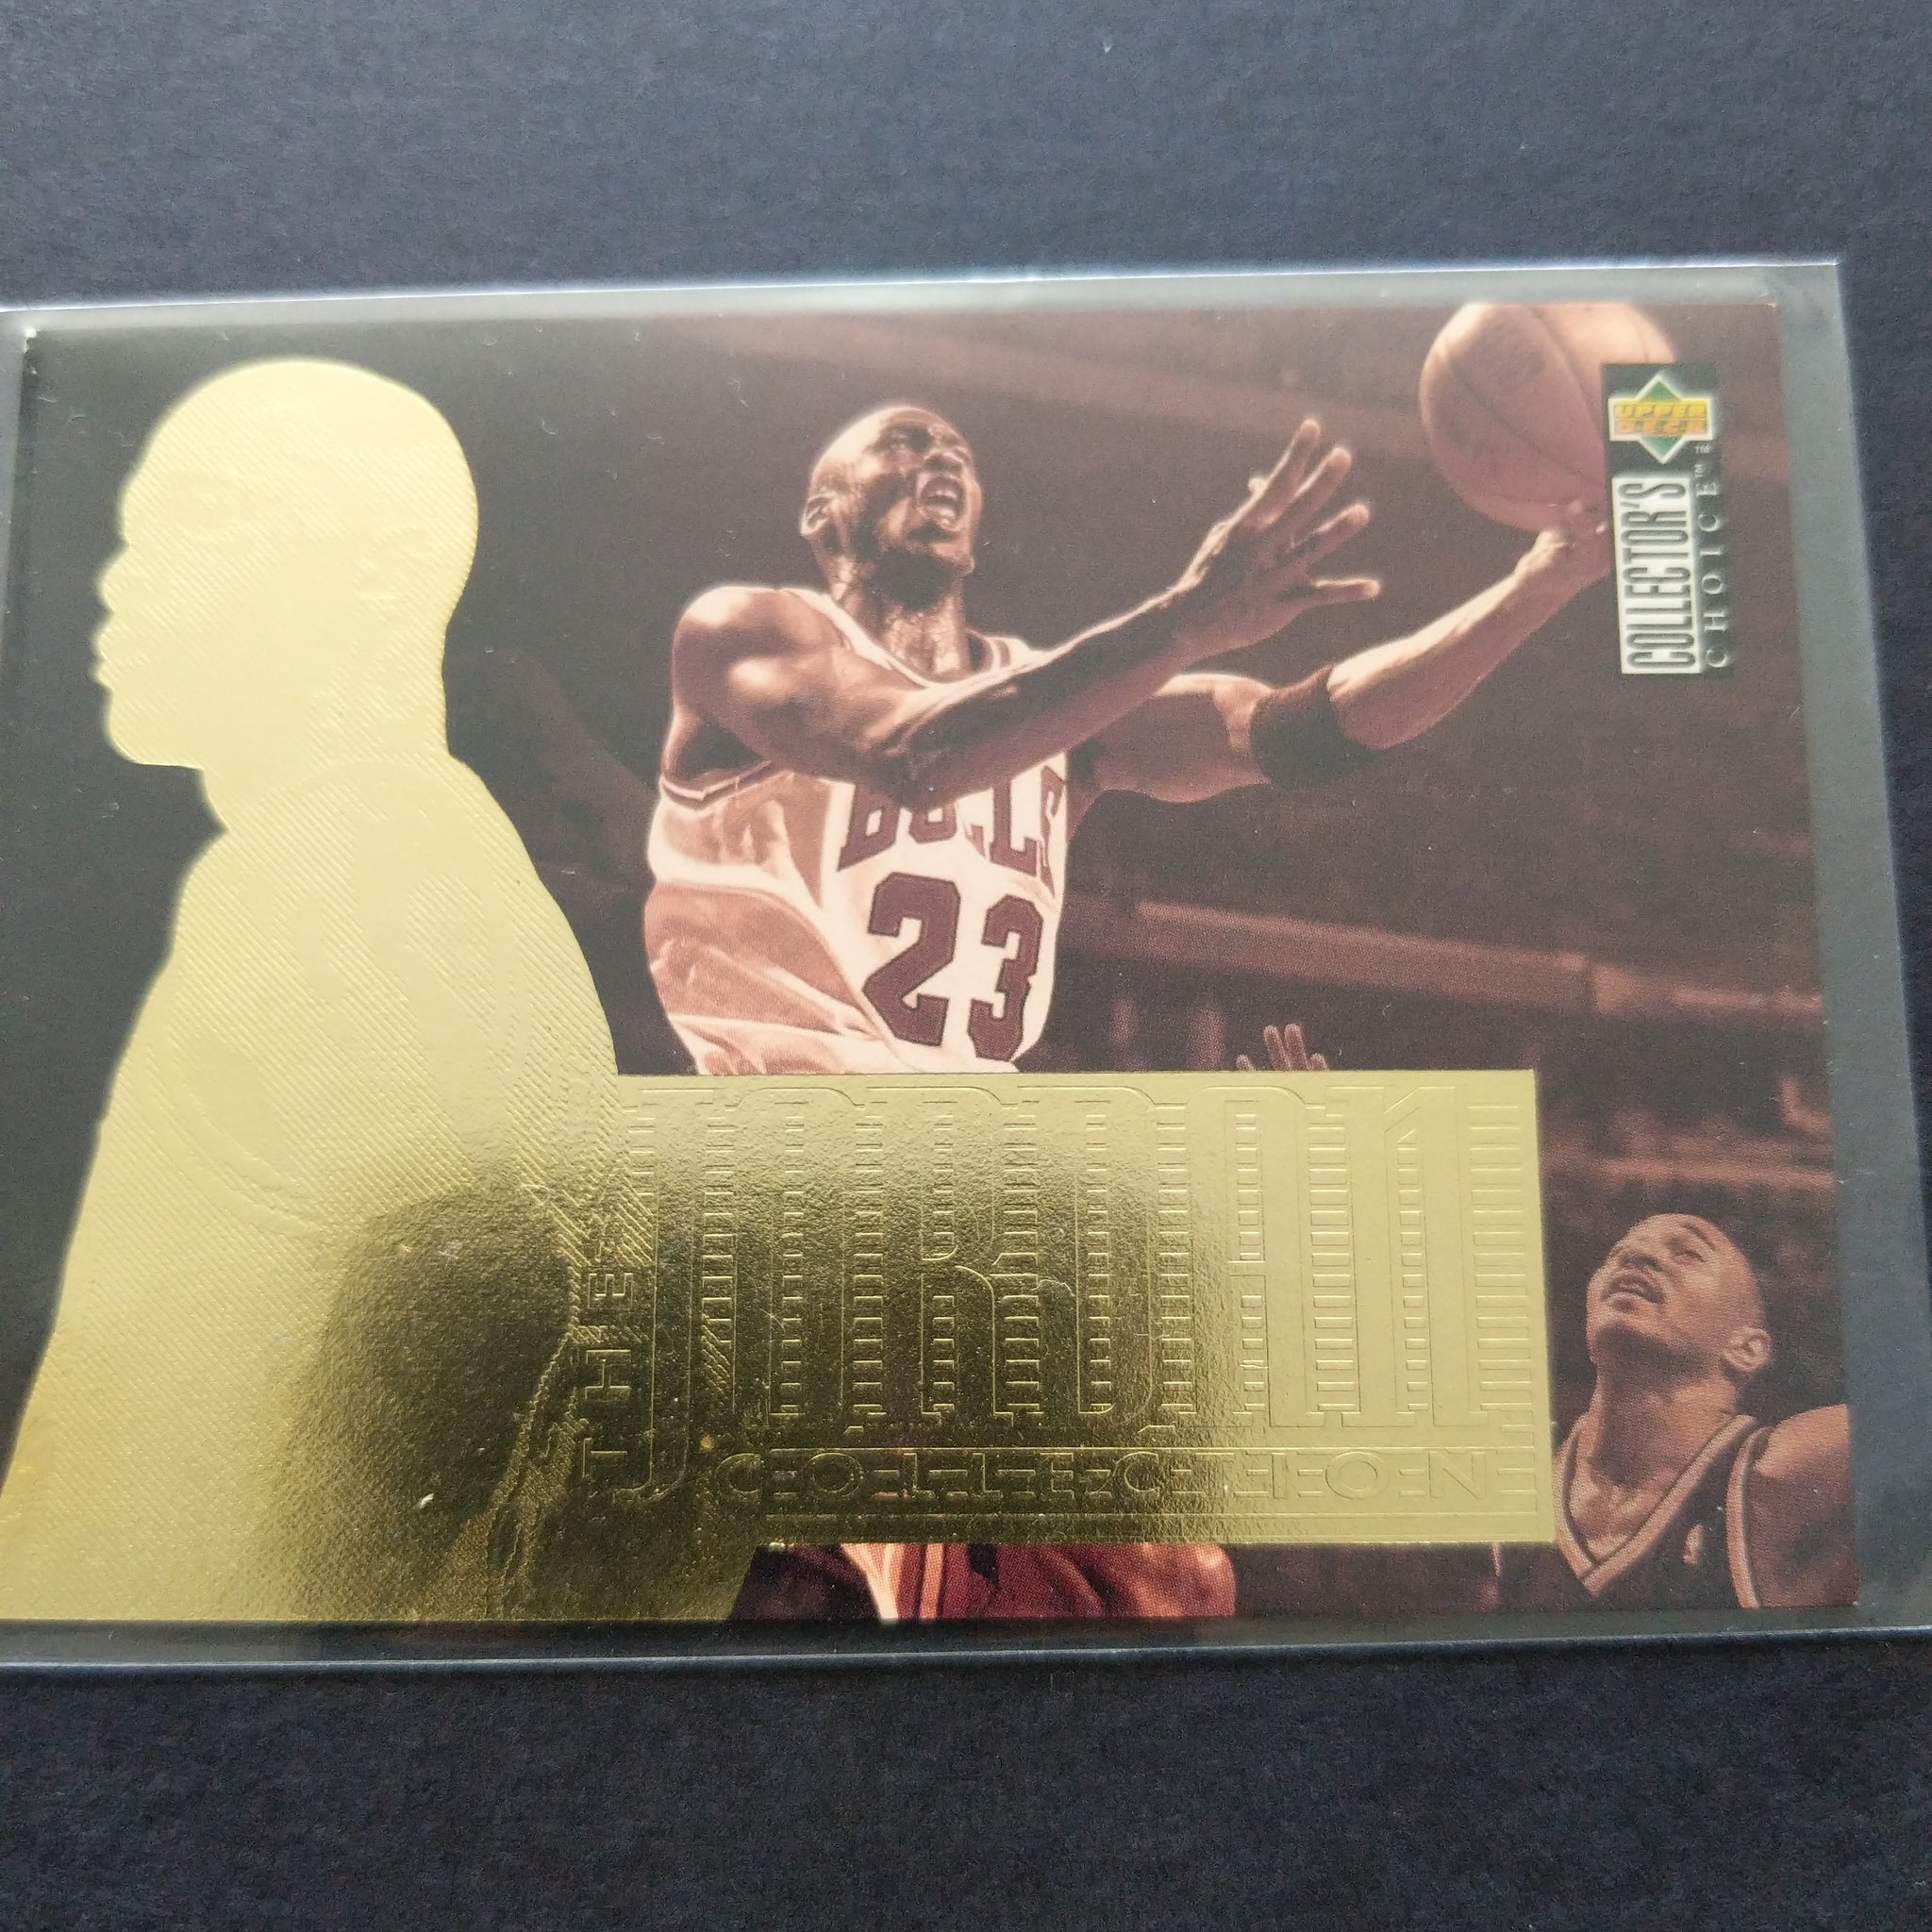 1996 Upper Deck The Jordan Collection Michael Jordan NBA